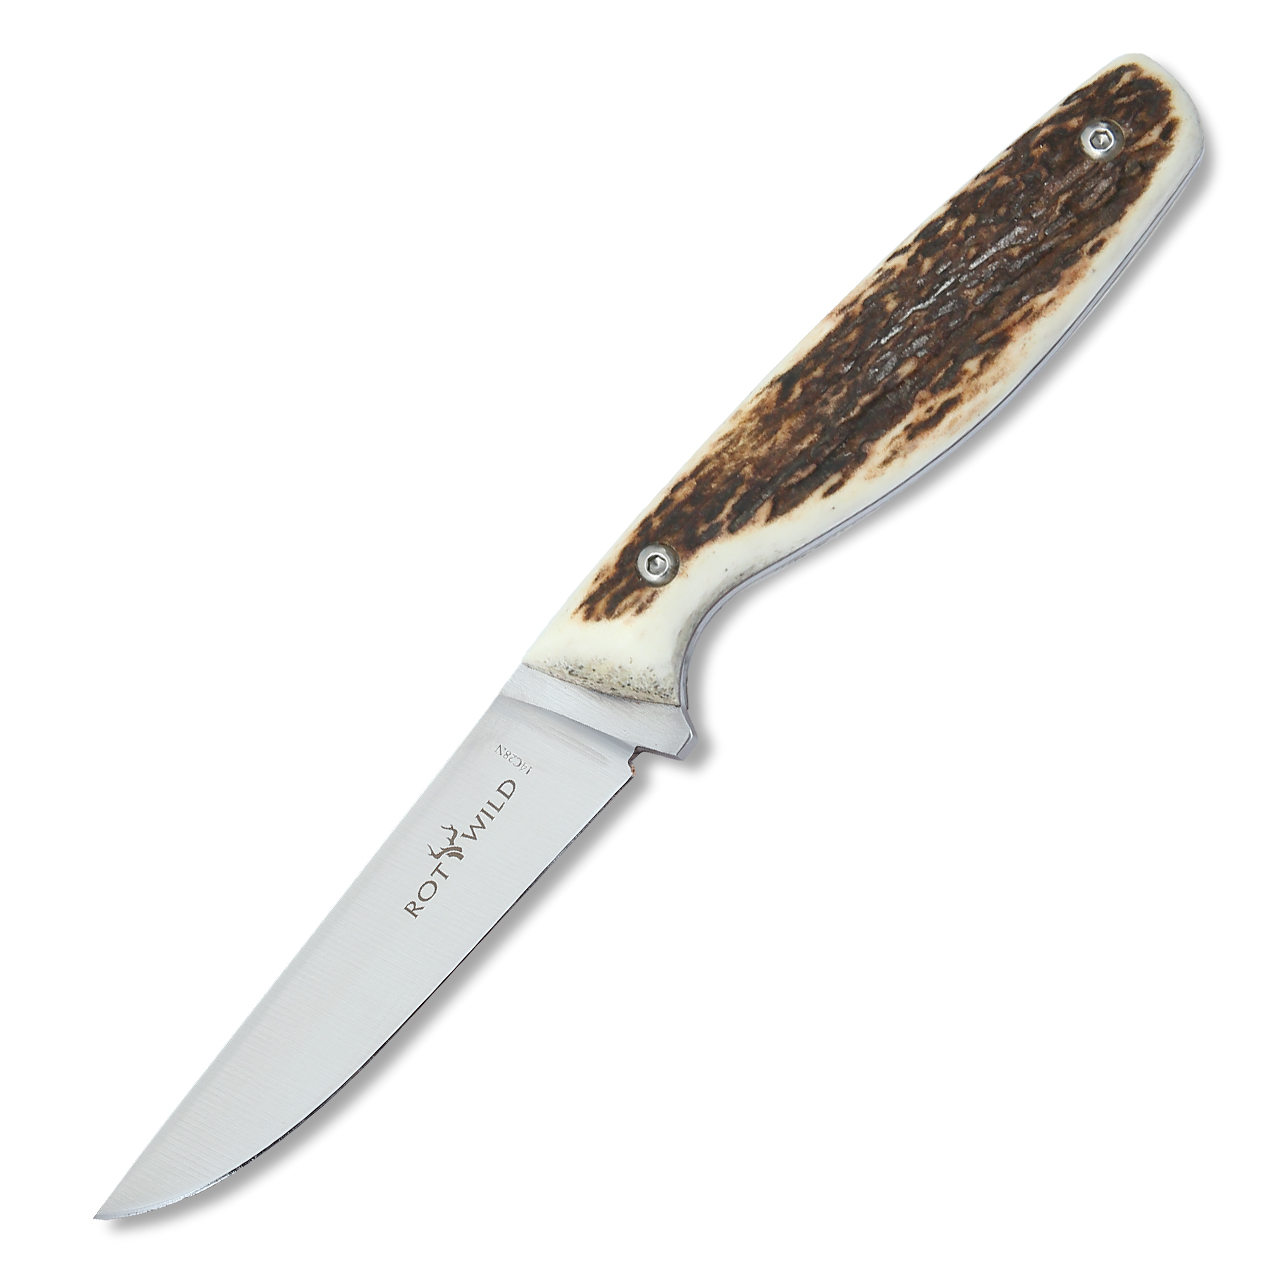 Hunting knife "Merlin" buckhorn